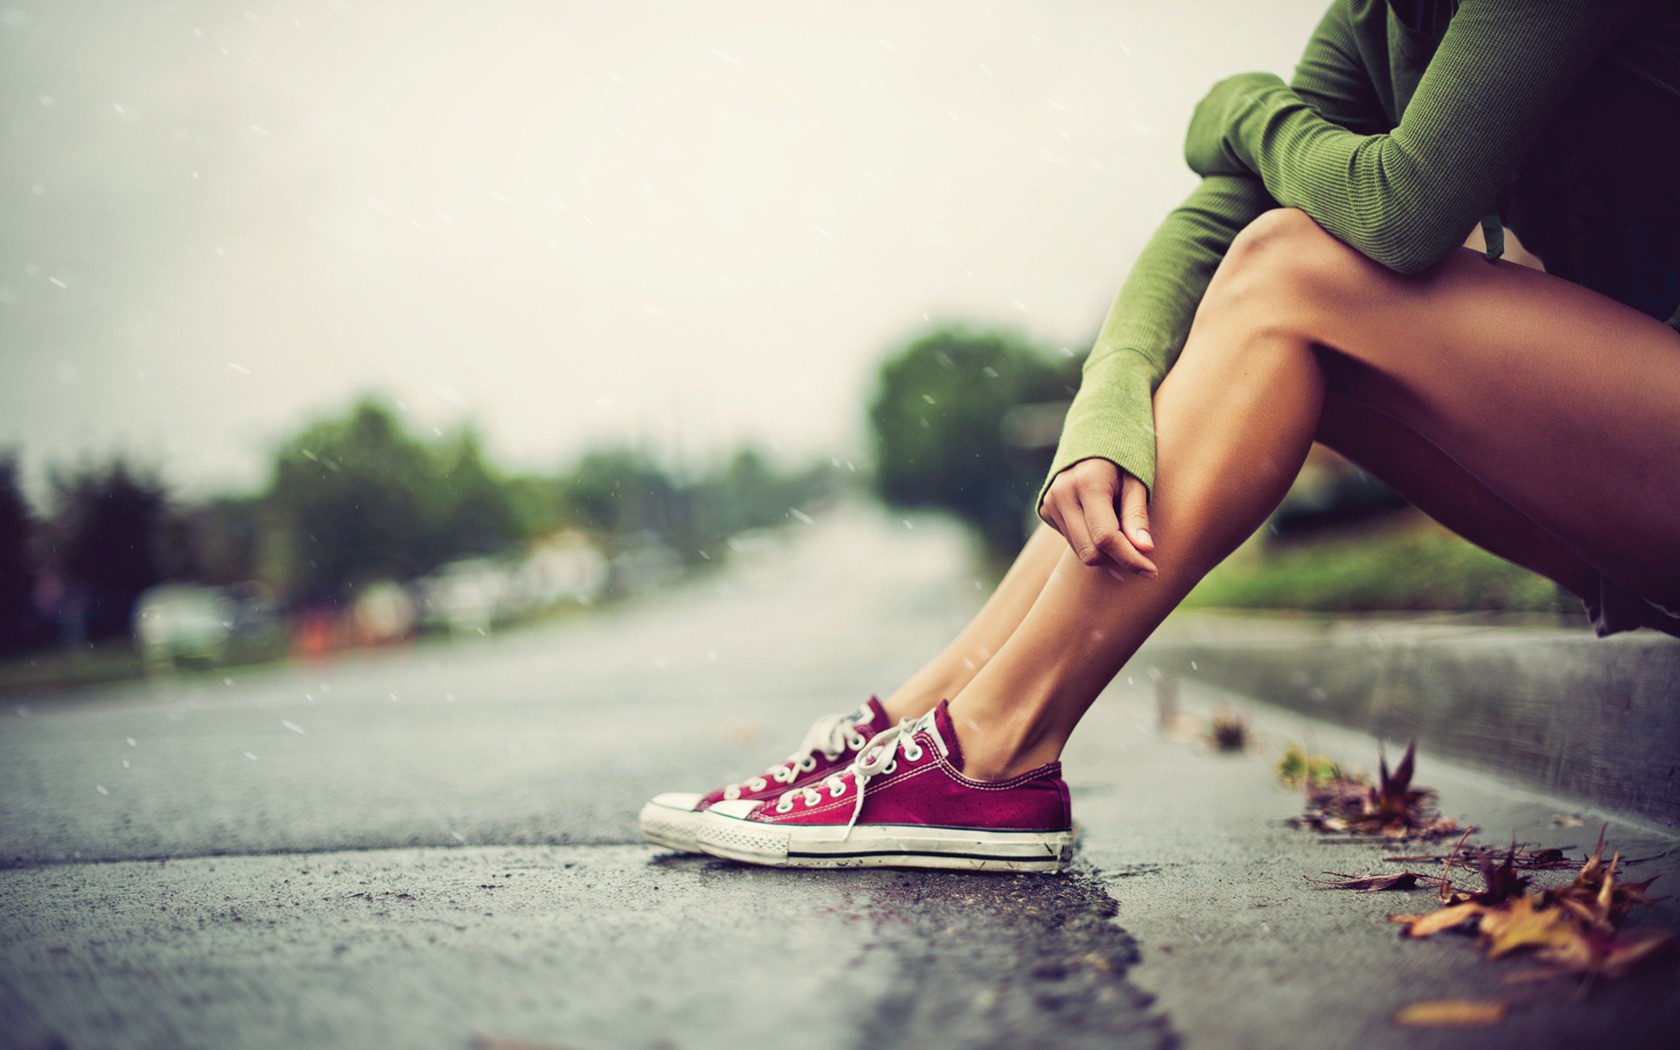 Women Converse Legs Alone Pavements Rain Women Outdoors Sitting Green Clothing Wet Street Asphalt So 1680x1050